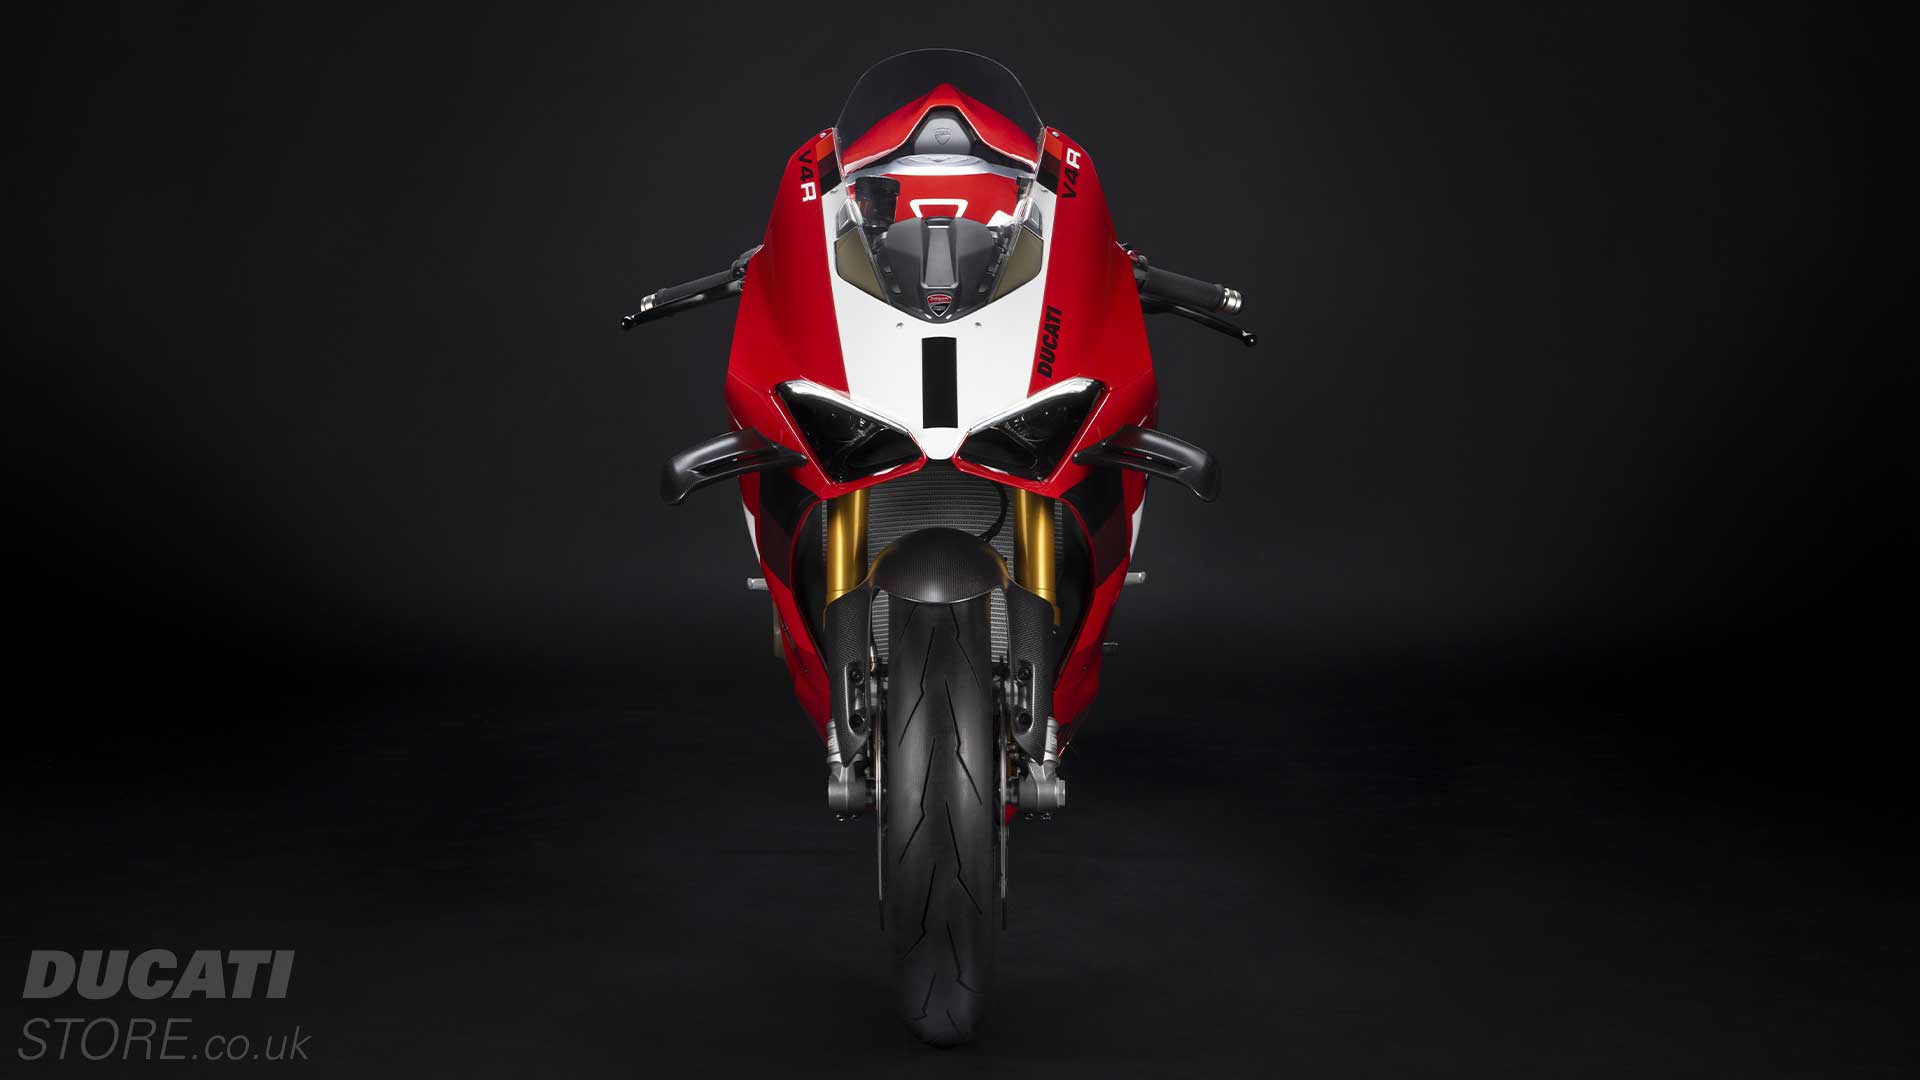 Ducati Panigale V4R for Sale UK - Ducati Manchester